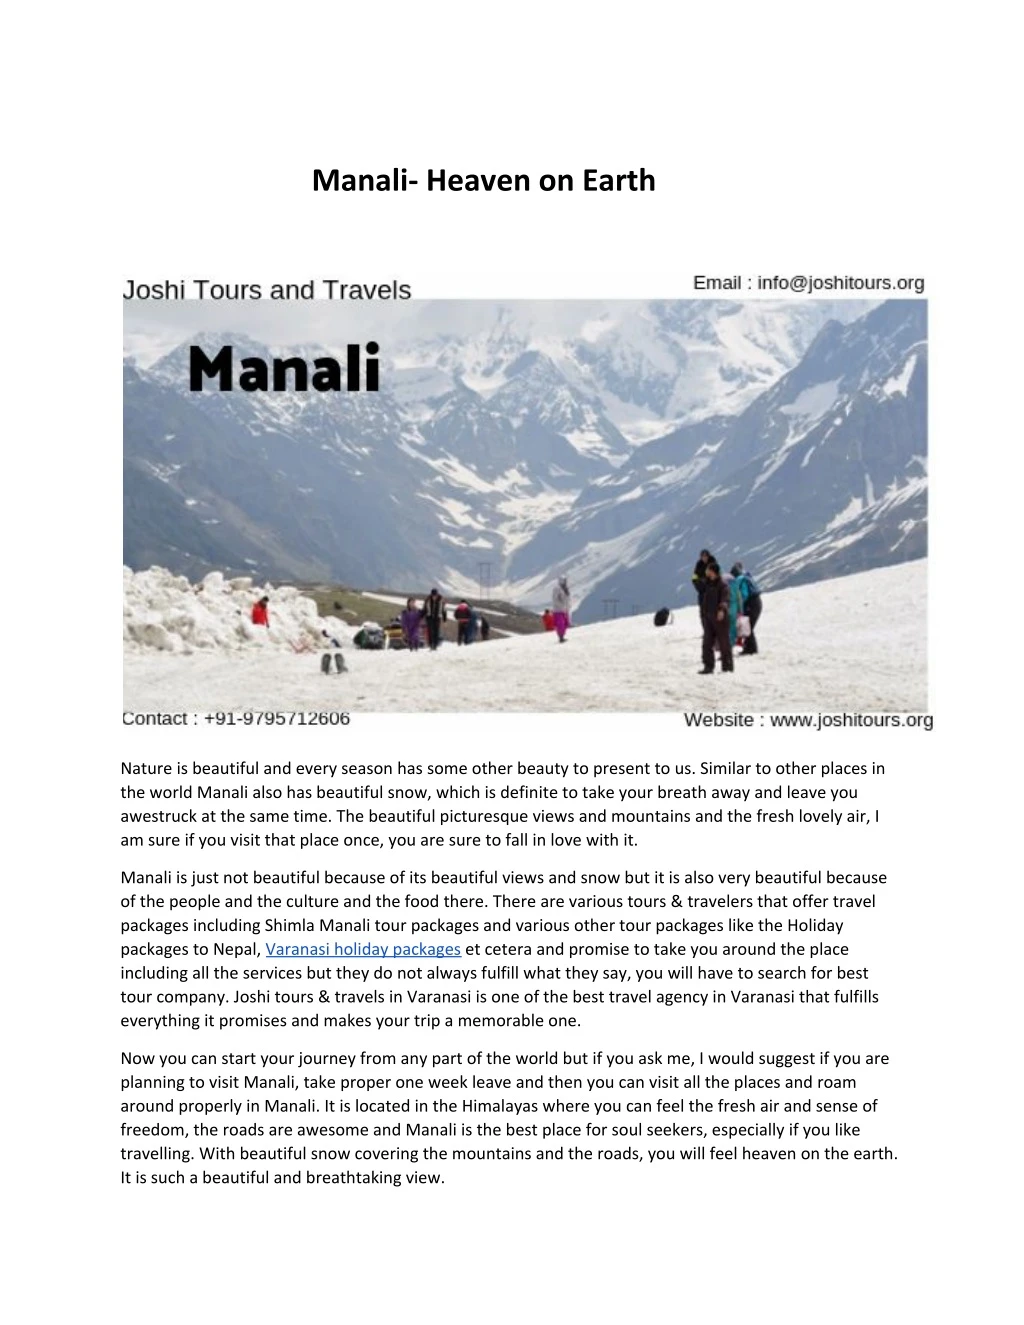 manali heaven on earth